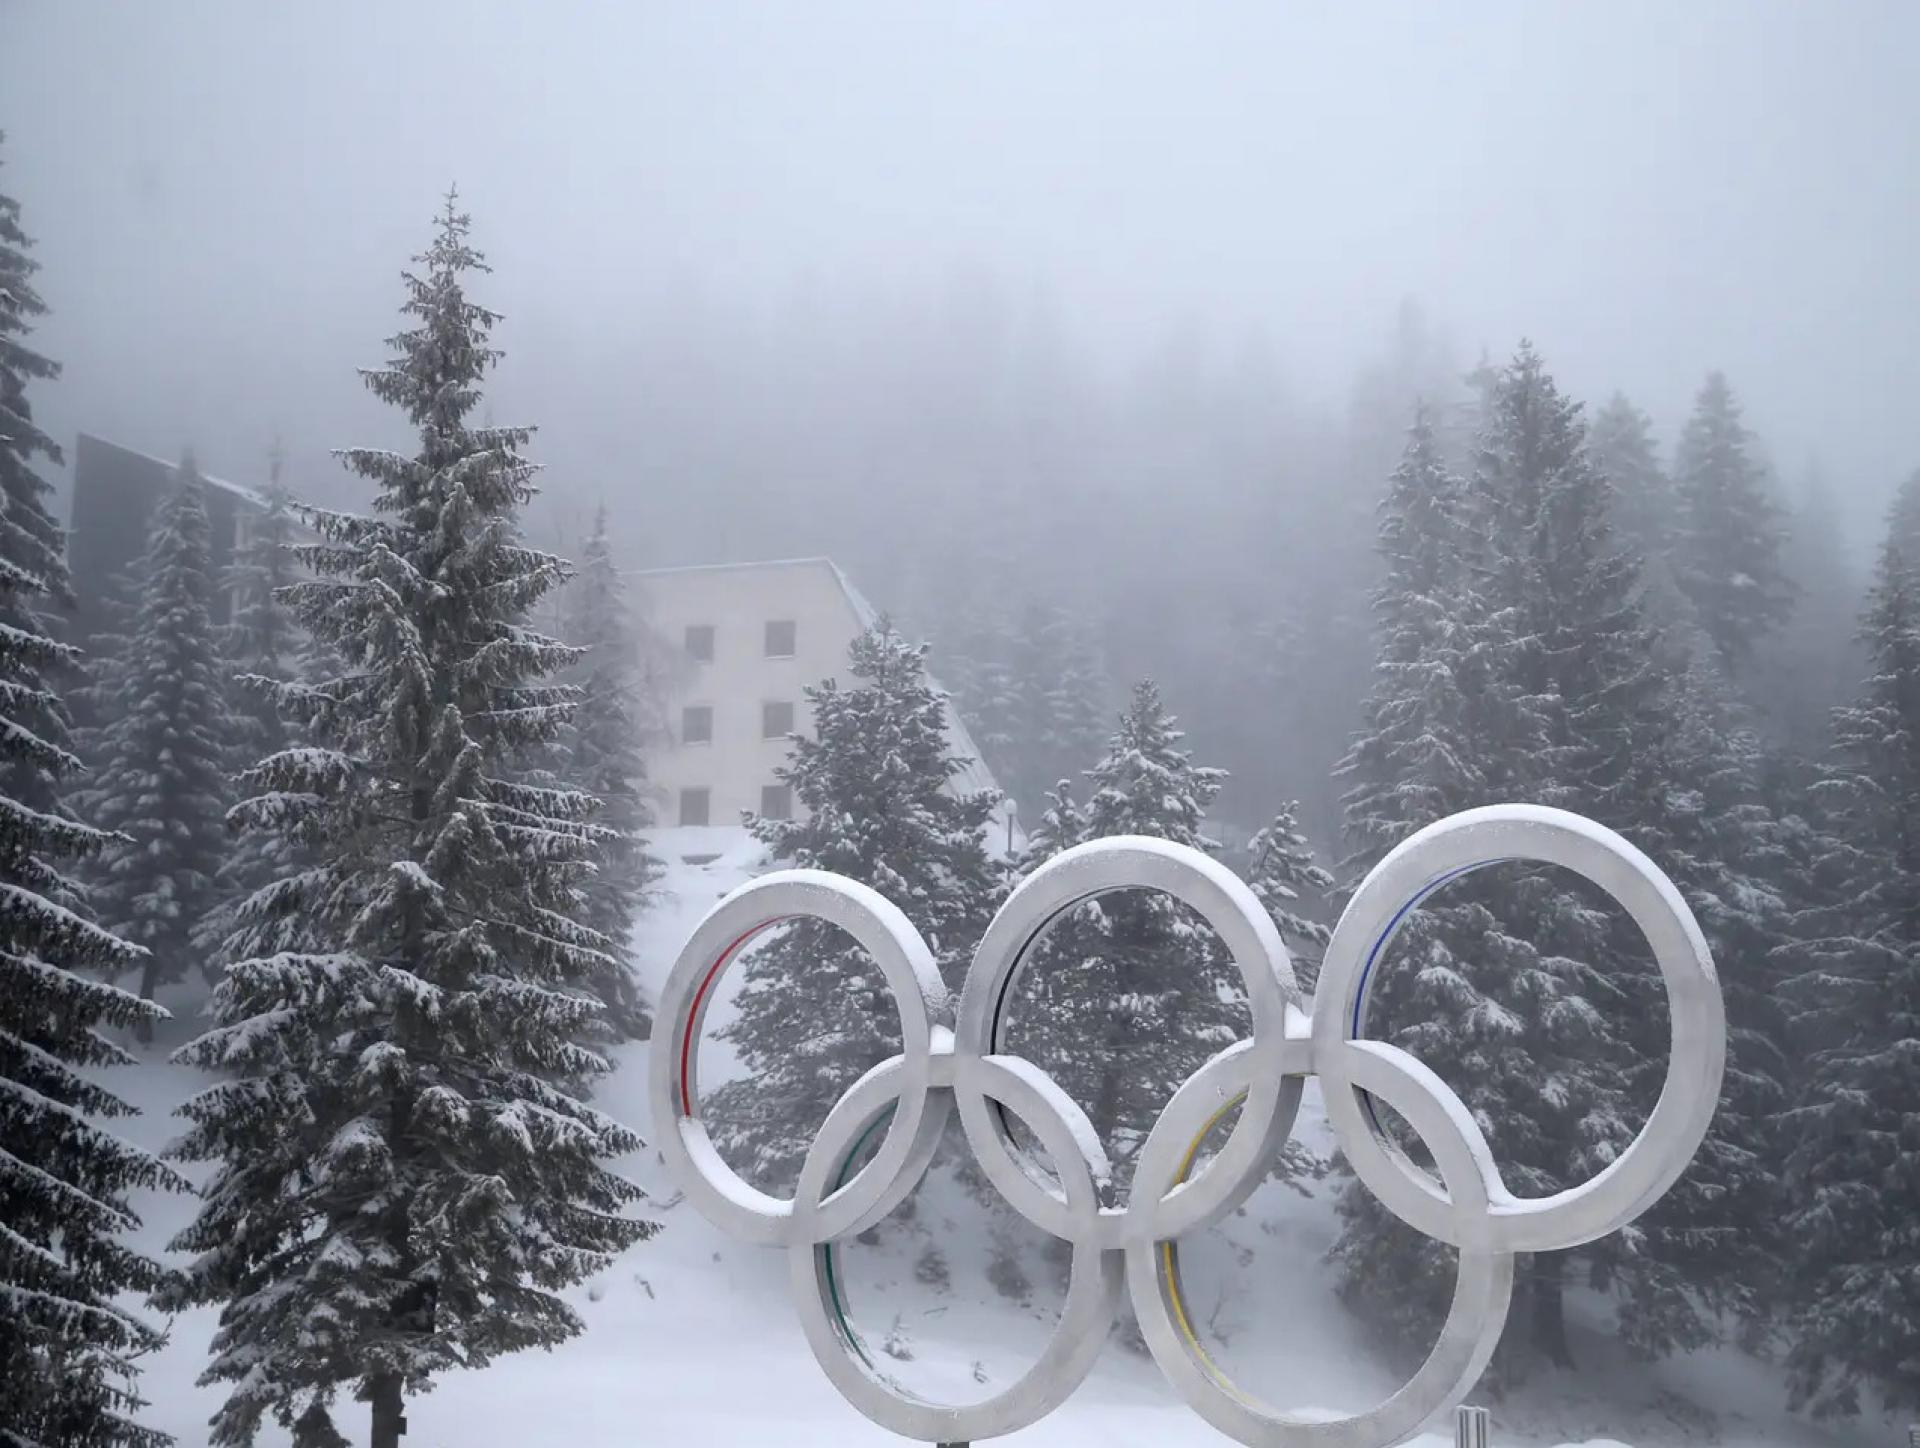 The Olympic rings as seen on the Jahorina Mountain near Sarajevo on February 5, 2019. | Photo © Dado Ruvić